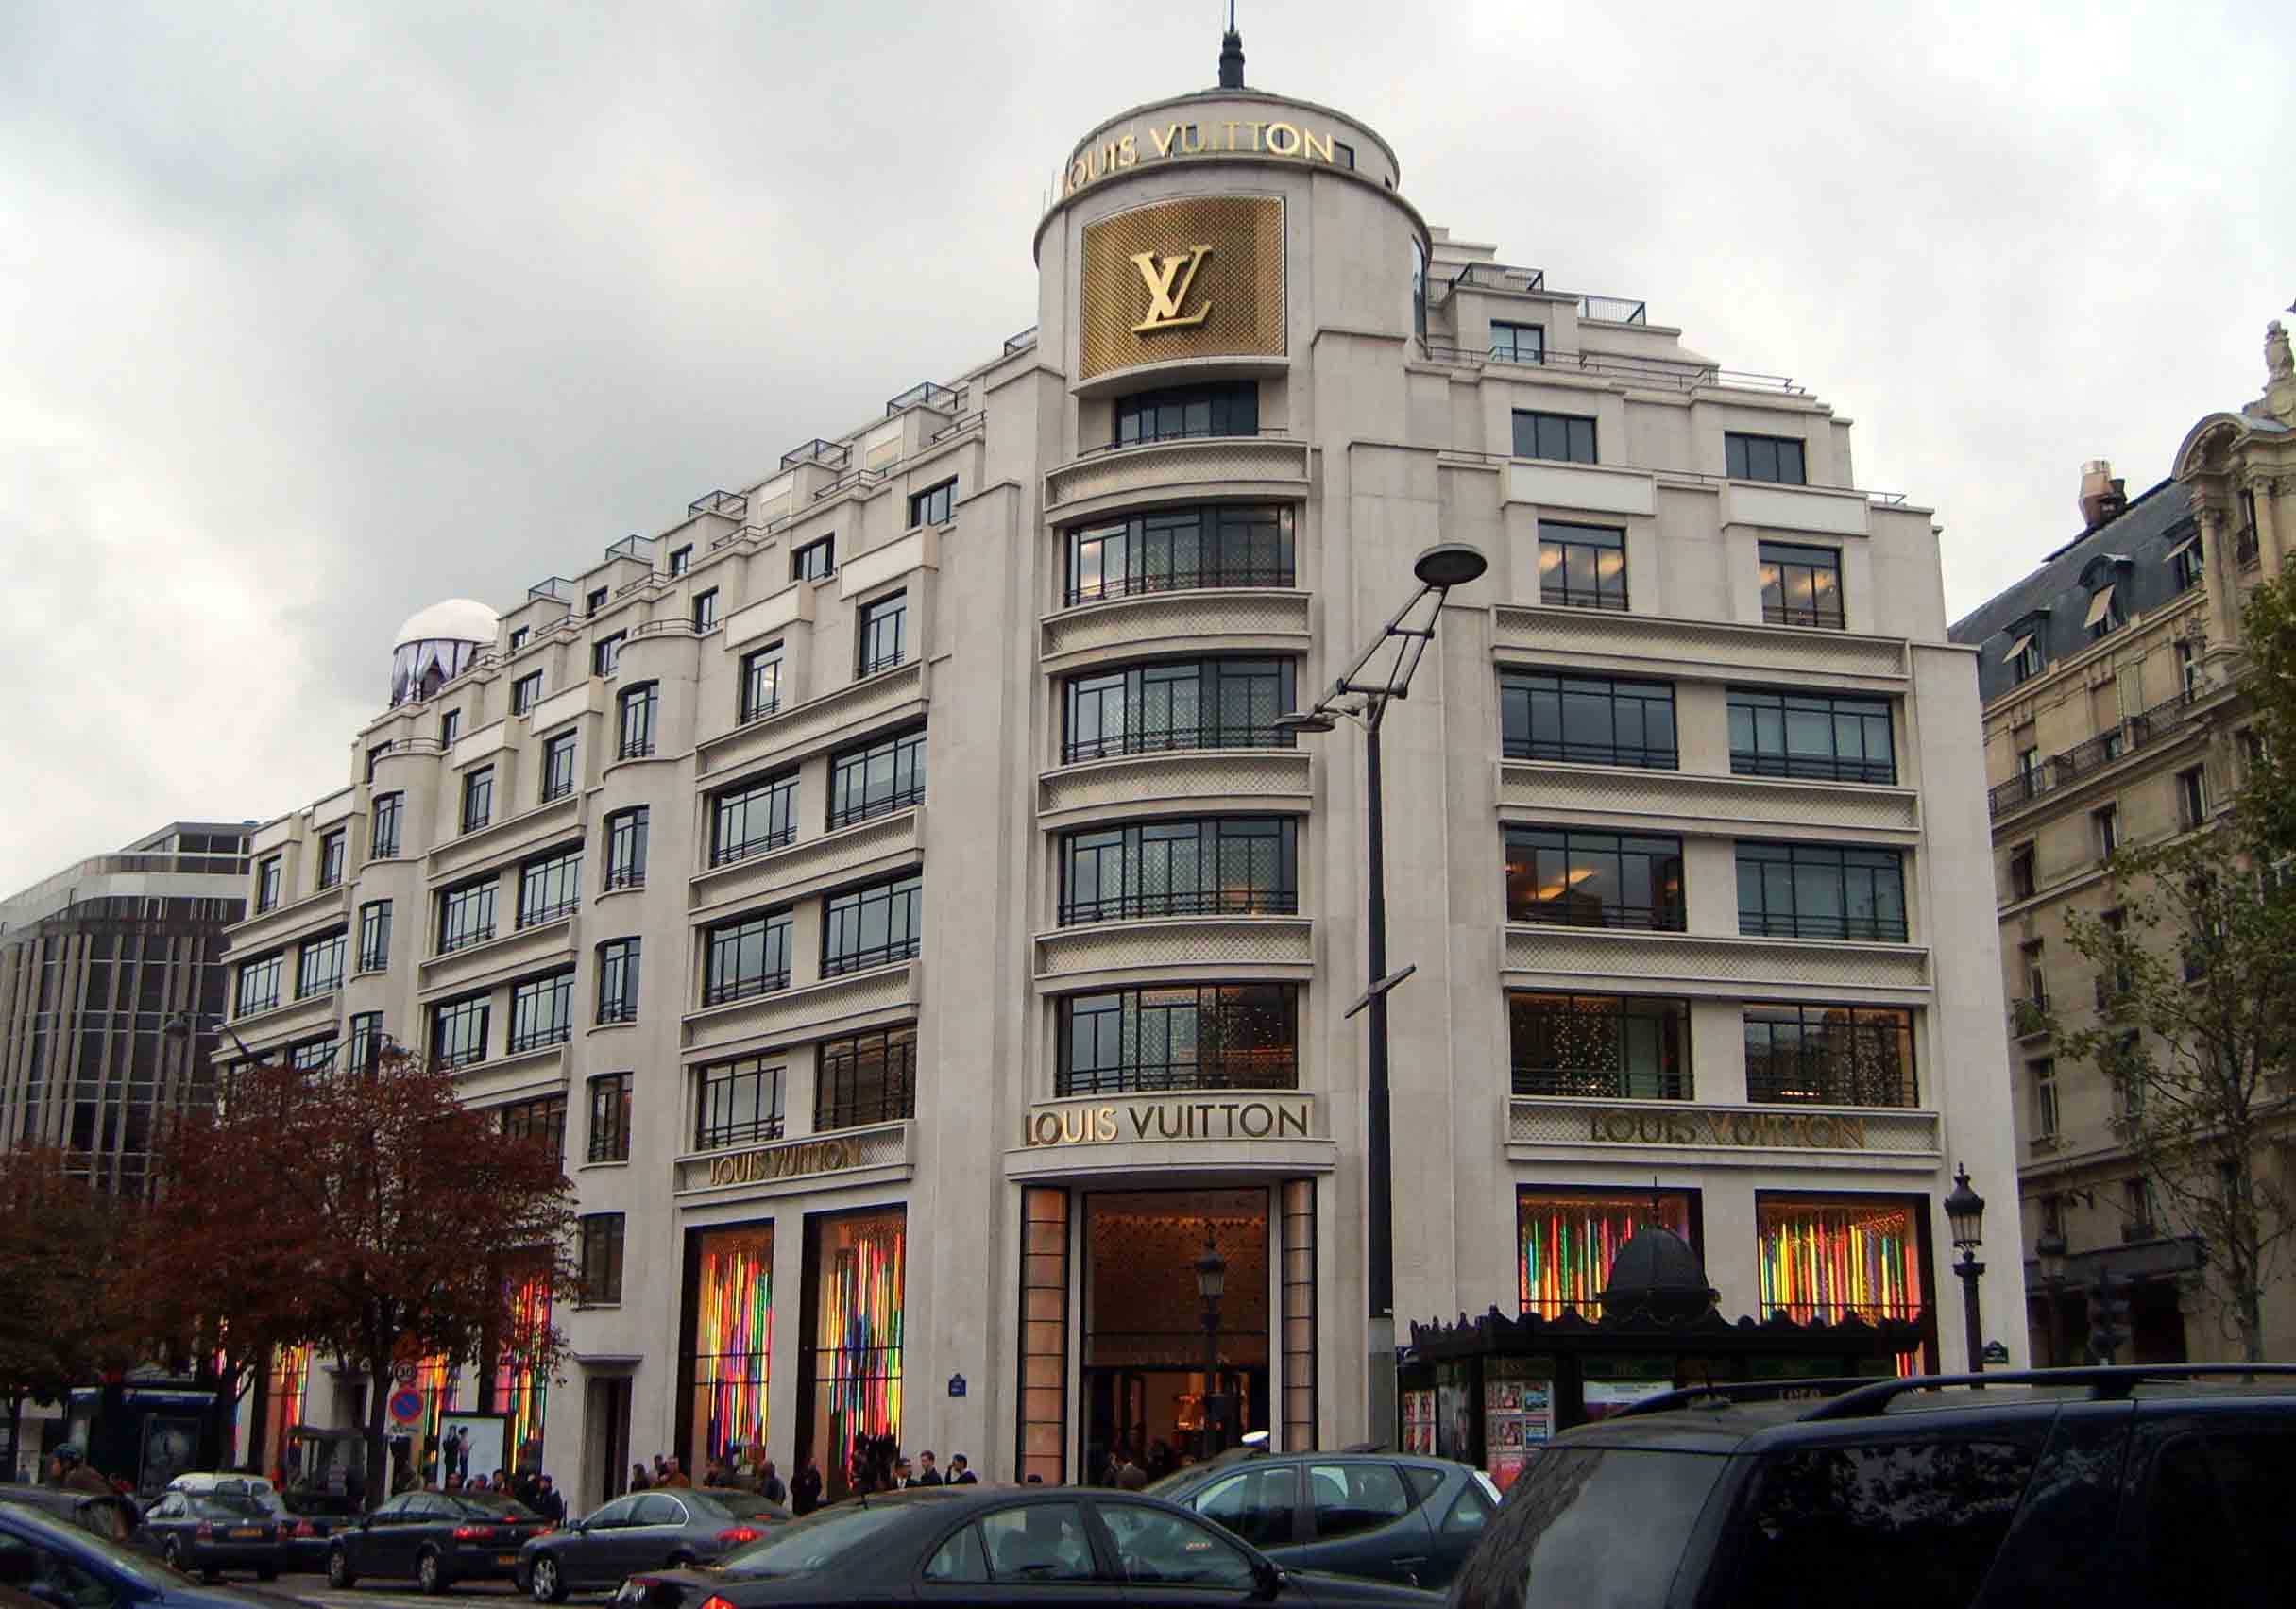 Louis Vuitton Cup - Wikipedia